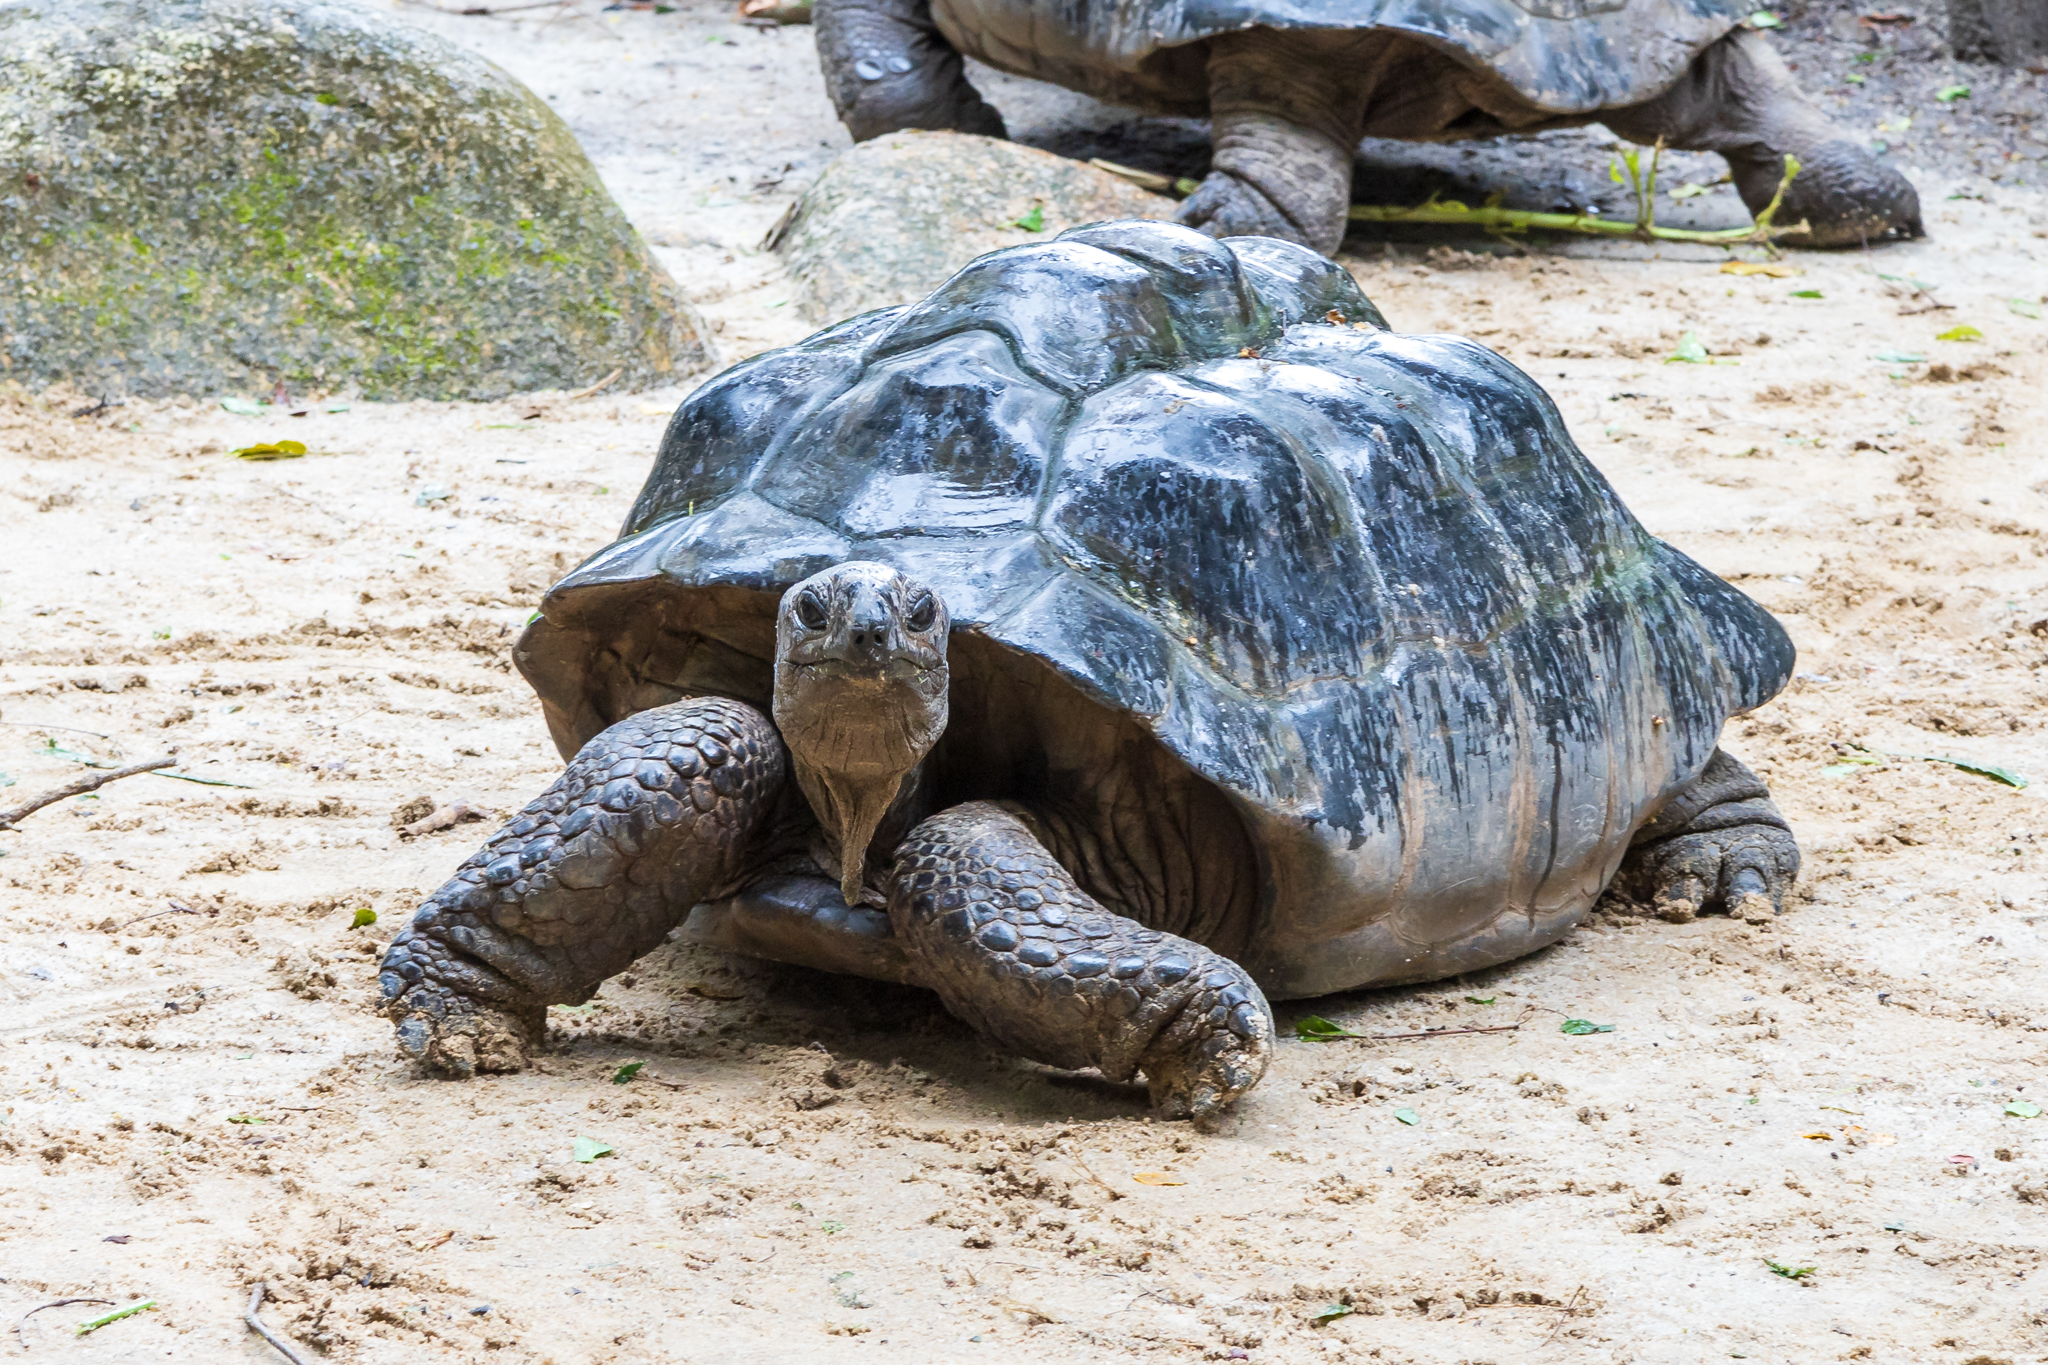 Tartaruga-gigante-de-aldabra (Aldabrachelys gigantea) · BioDiversity4All